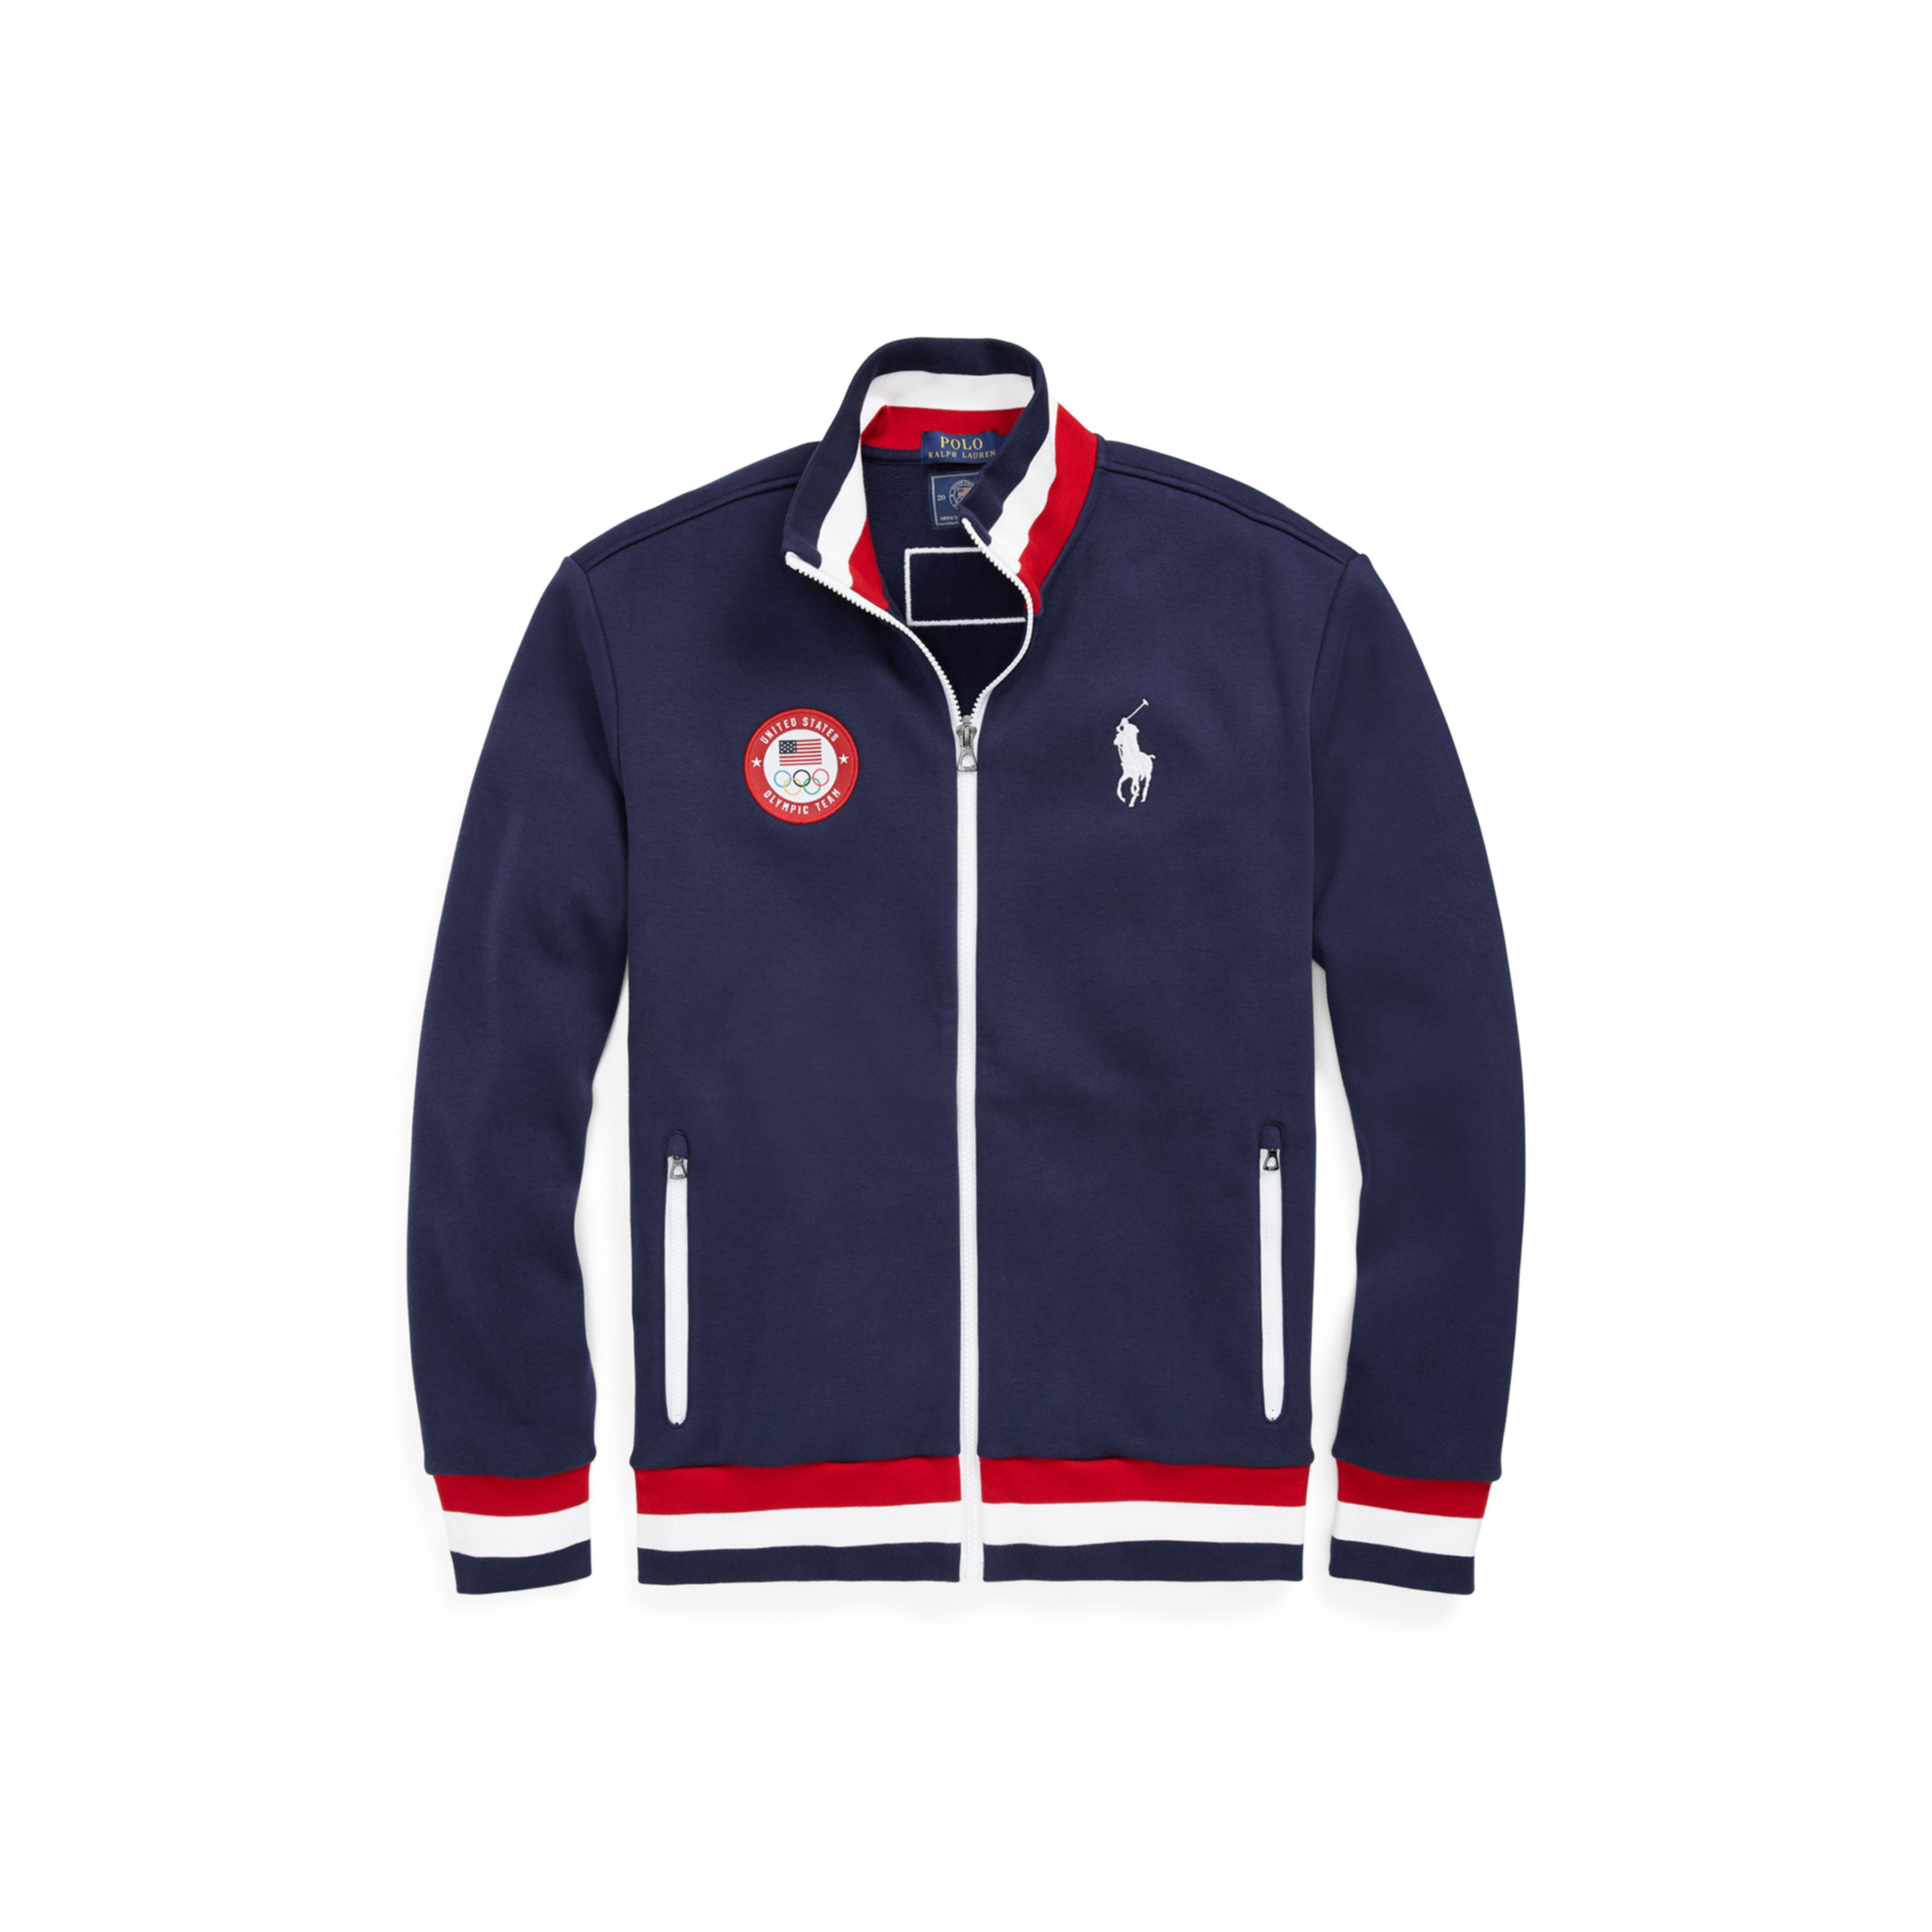 Lyst - Polo Ralph Lauren Team Usa Fleece Track Jacket in Blue for Men